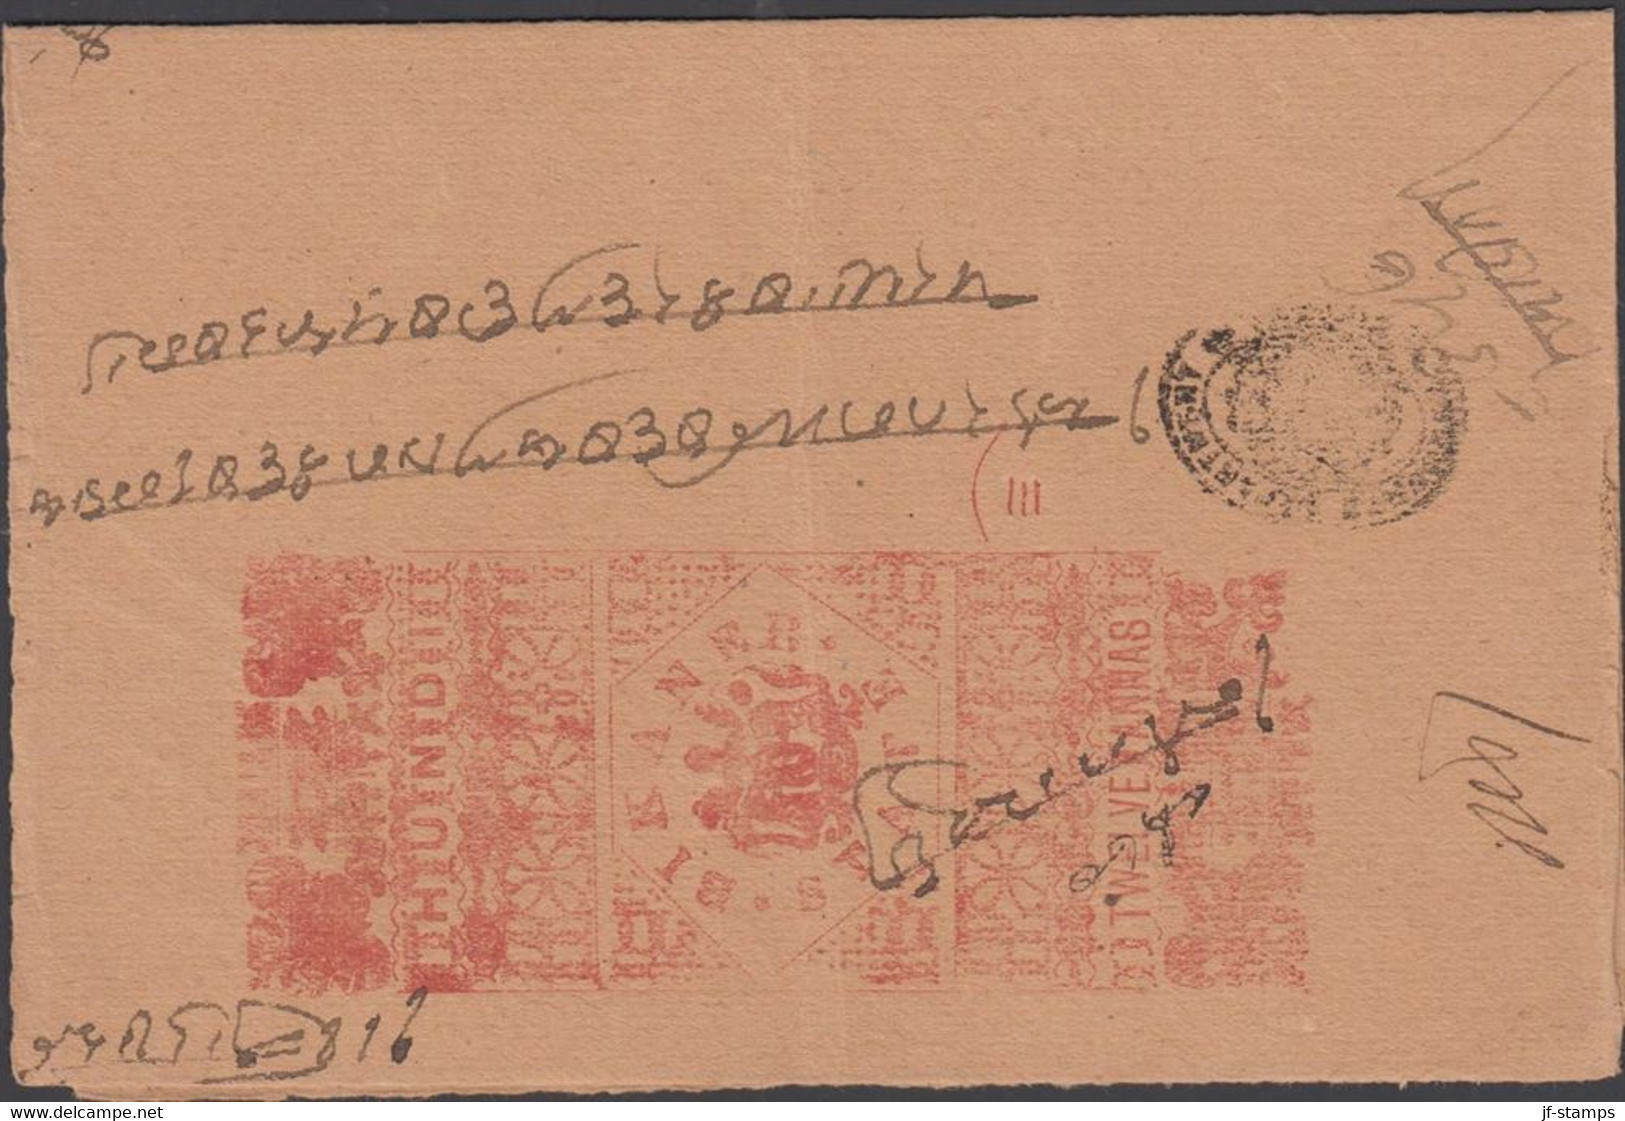 1920. BIKANER STATE. Interesting Folder Paper Cancelled In Red HUNDI BIKANER STATE TWELVE ANNAS. Unusual.  - JF427556 - Chamba